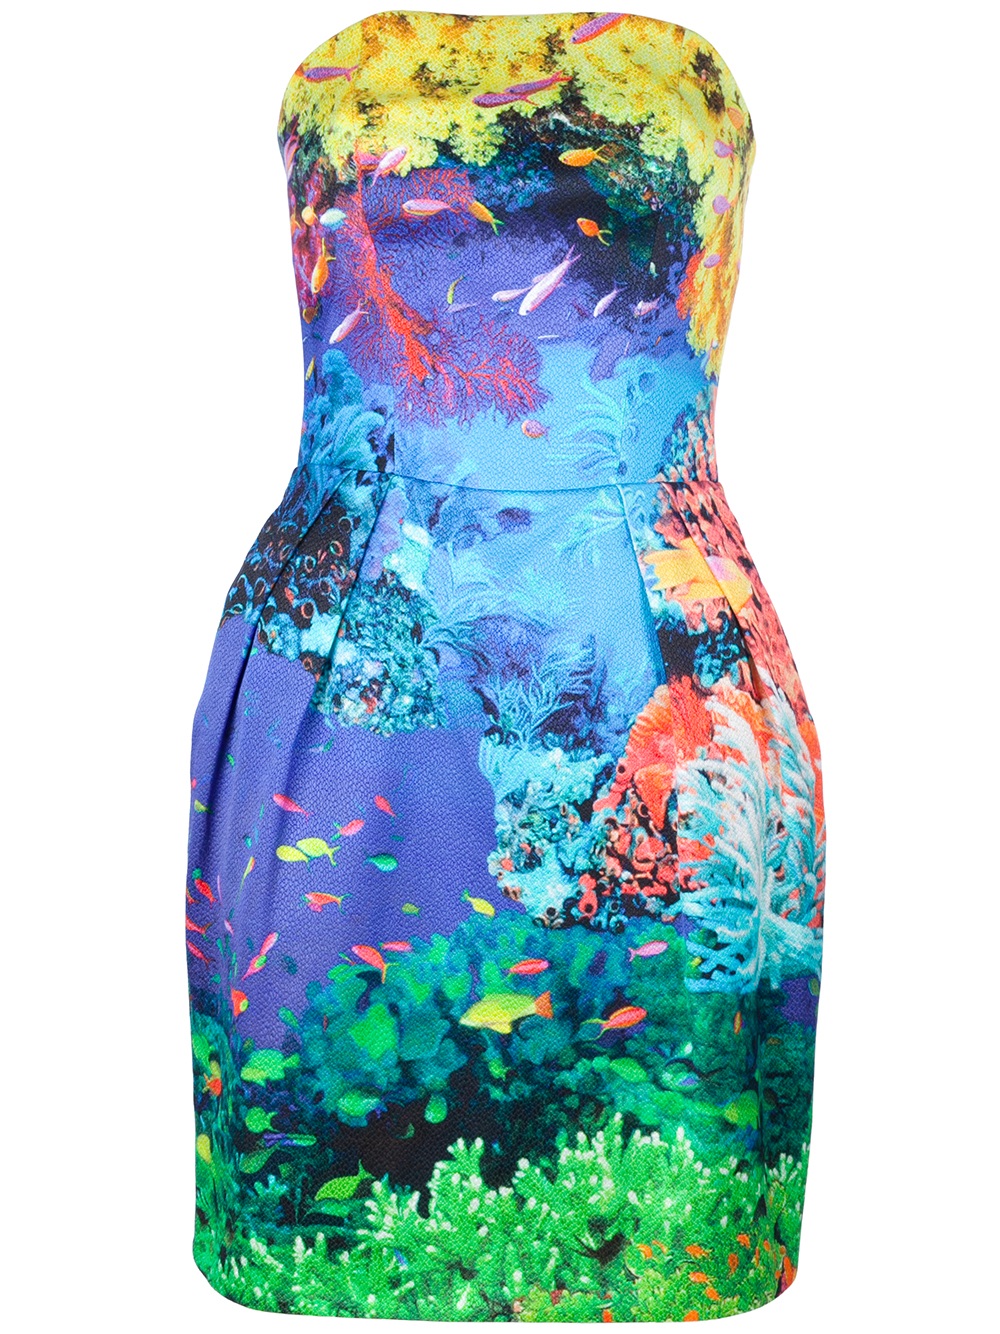 LOOK Primark Sea Fish Print Bubble Dress 8/10/12/14/16 Katrantzou | eBay